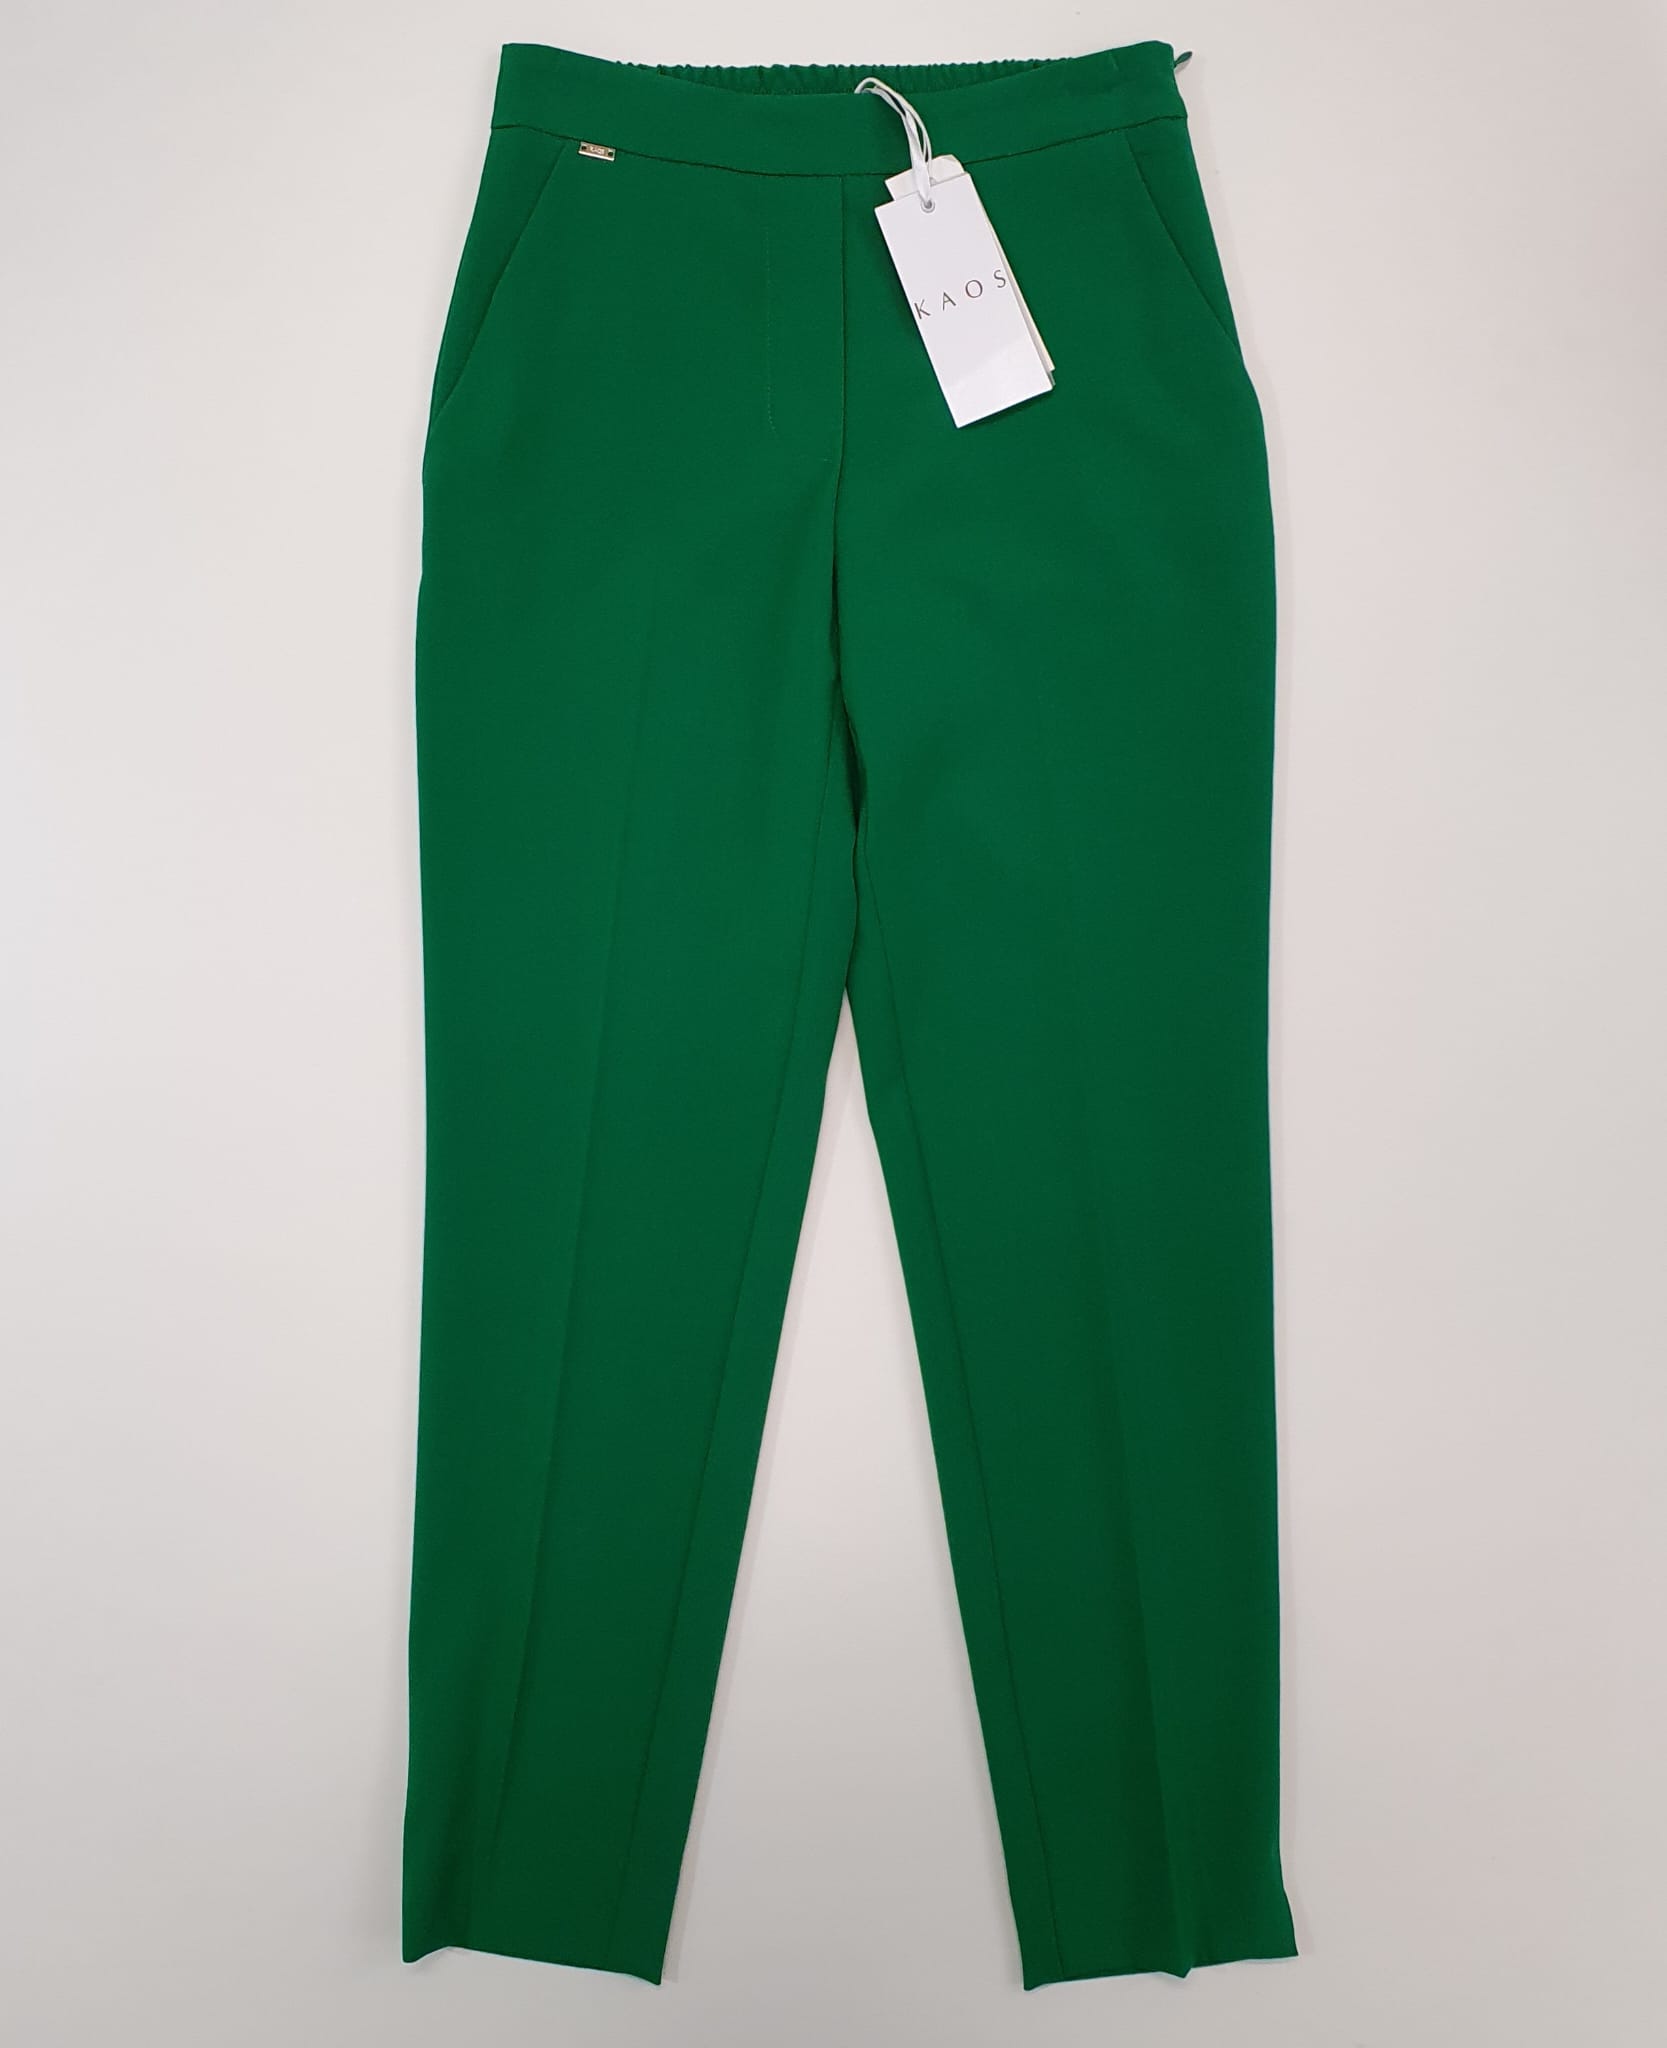 Pantalone KAOS poliviscosa Verde